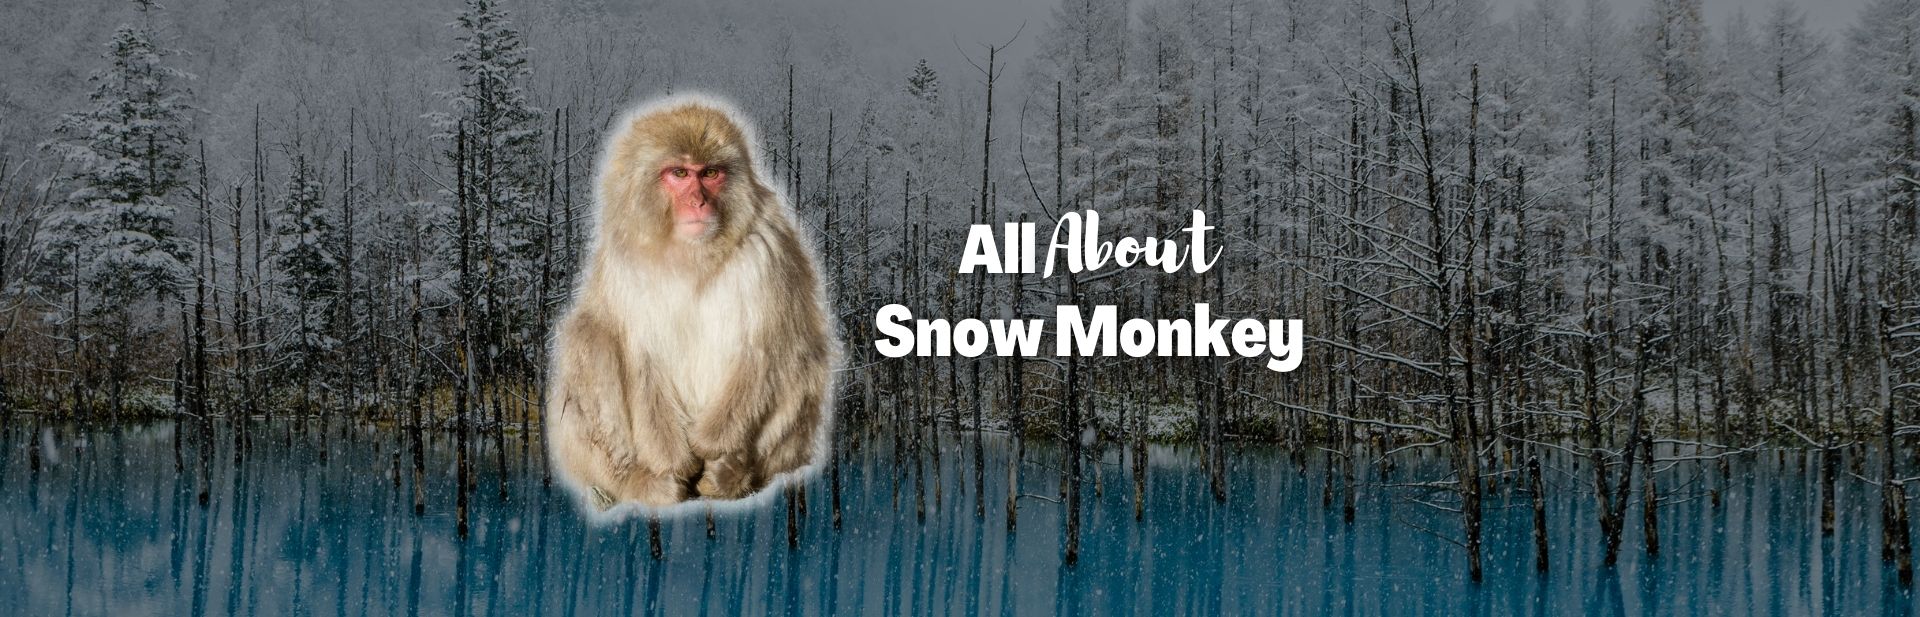 Snow Monkey: The Beloved Primates of Japan’s Hot Springs